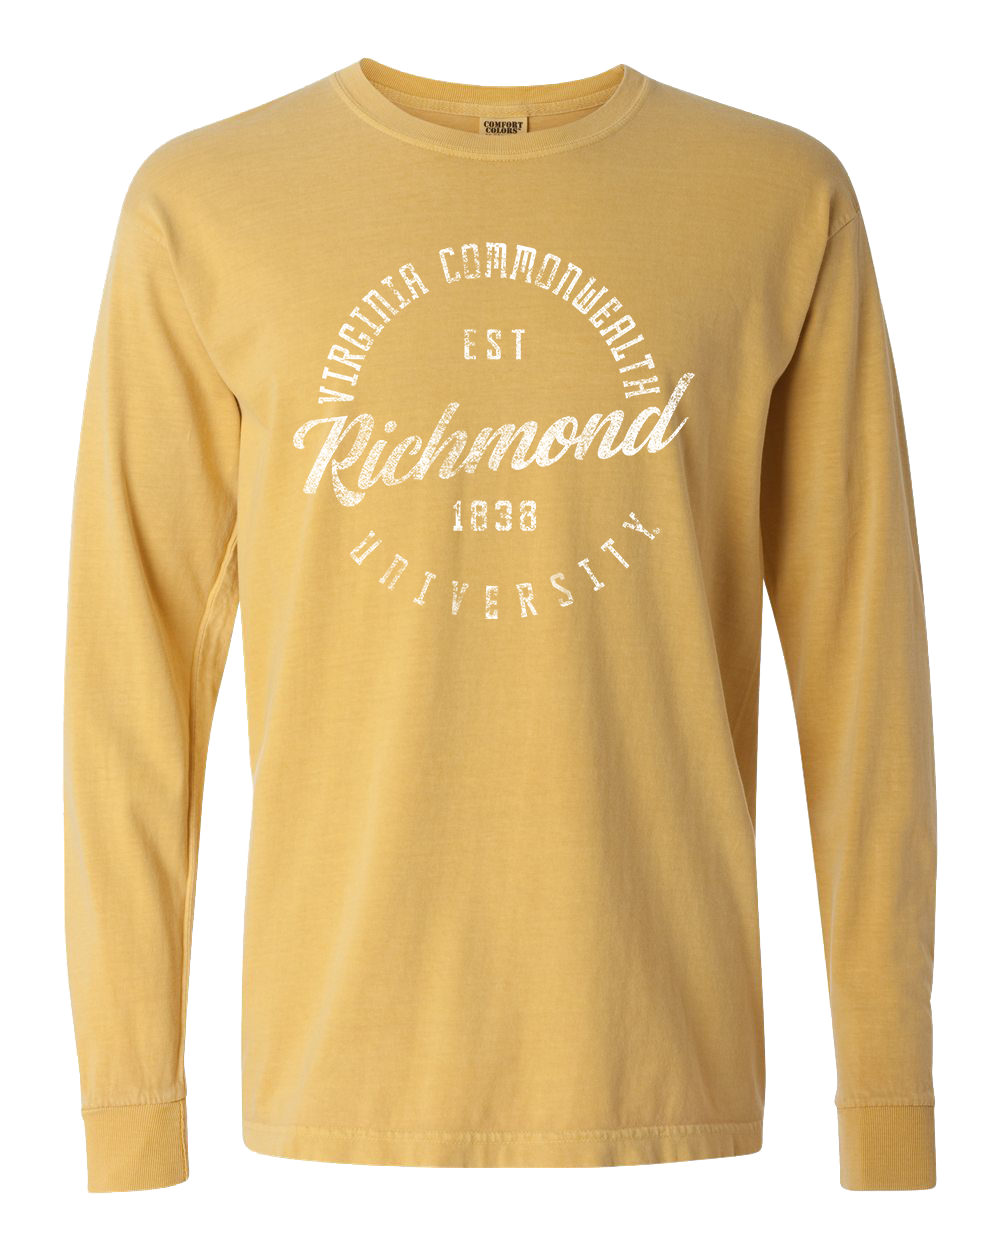 VCU Mustard Comfort T-shirt - Virginia Book Company